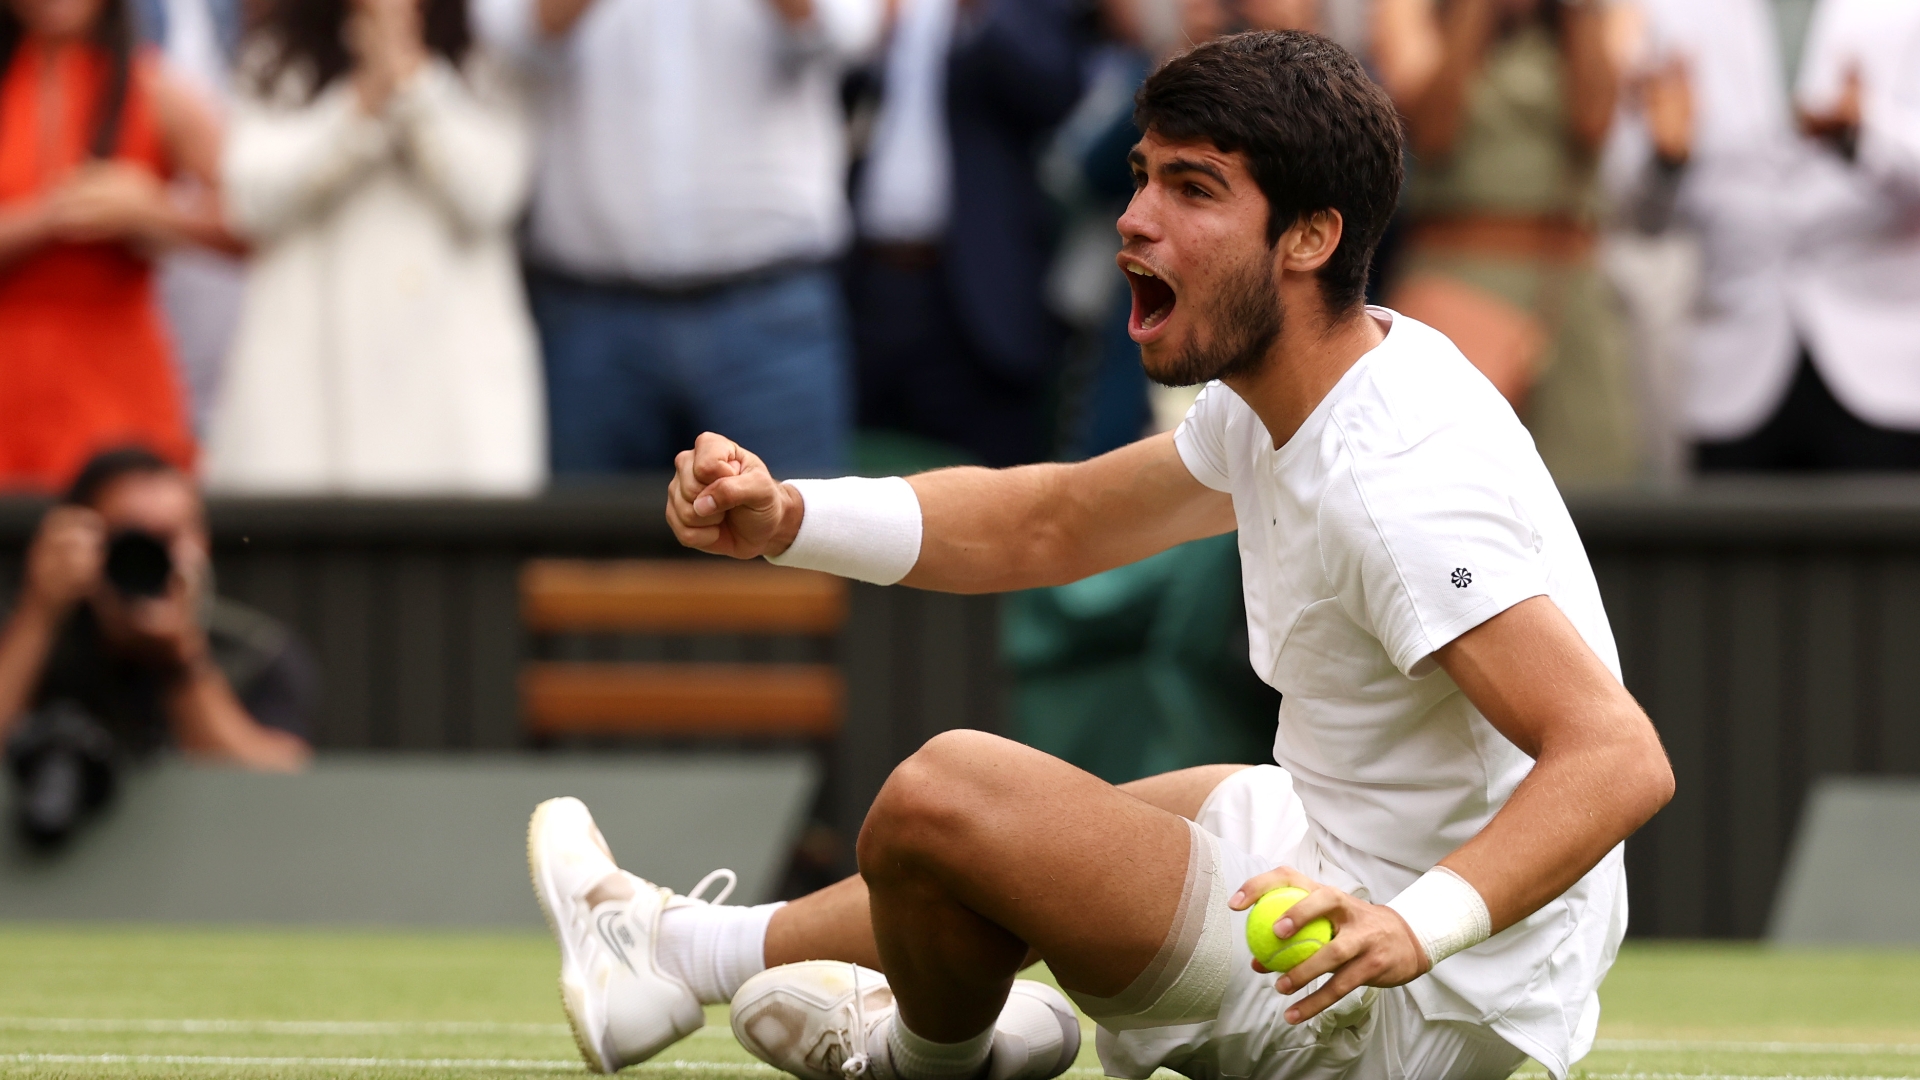 Alcaraz earns championship point over Djokovic to win Wimbledon - Stream the Video